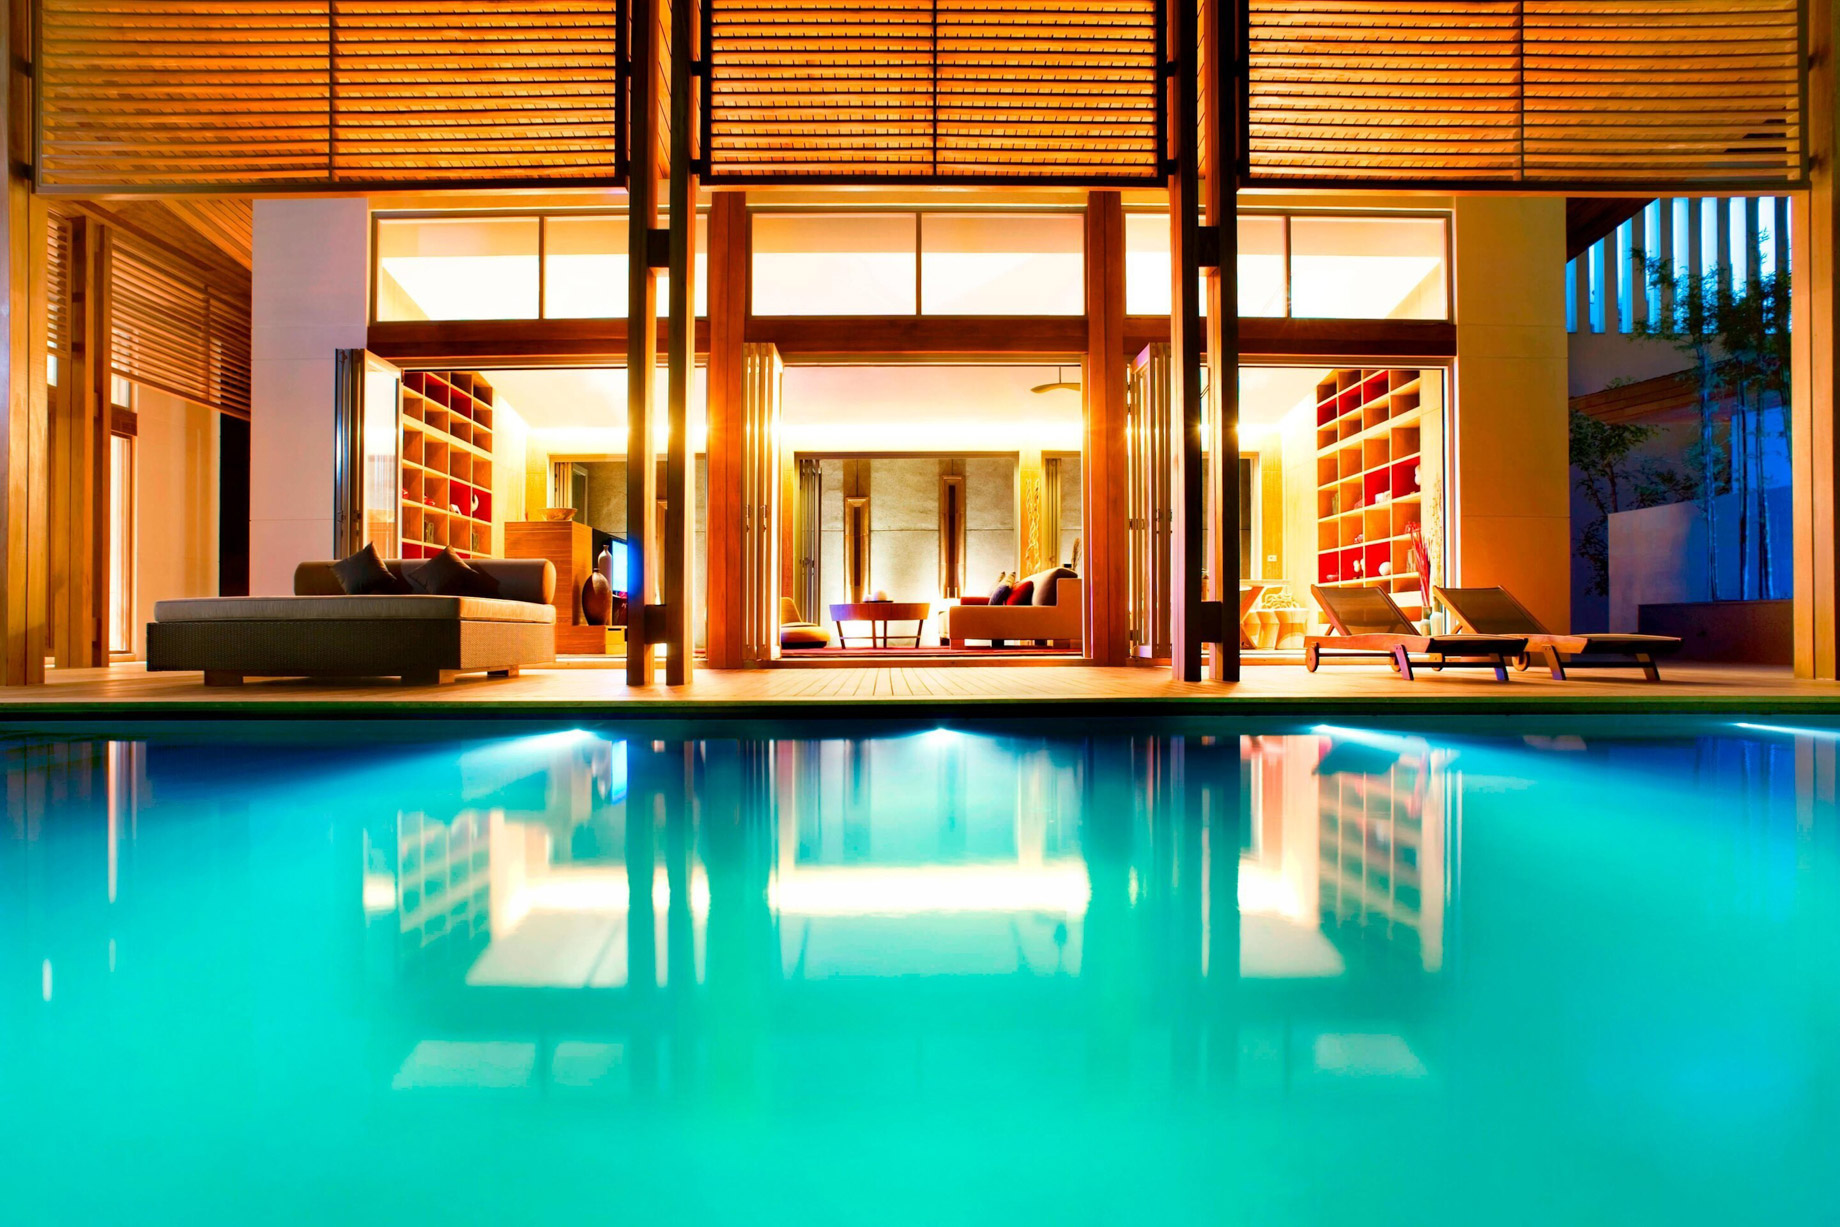 W Koh Samui Resort – Thailand – Residence Villa Living Room Pool View at Night